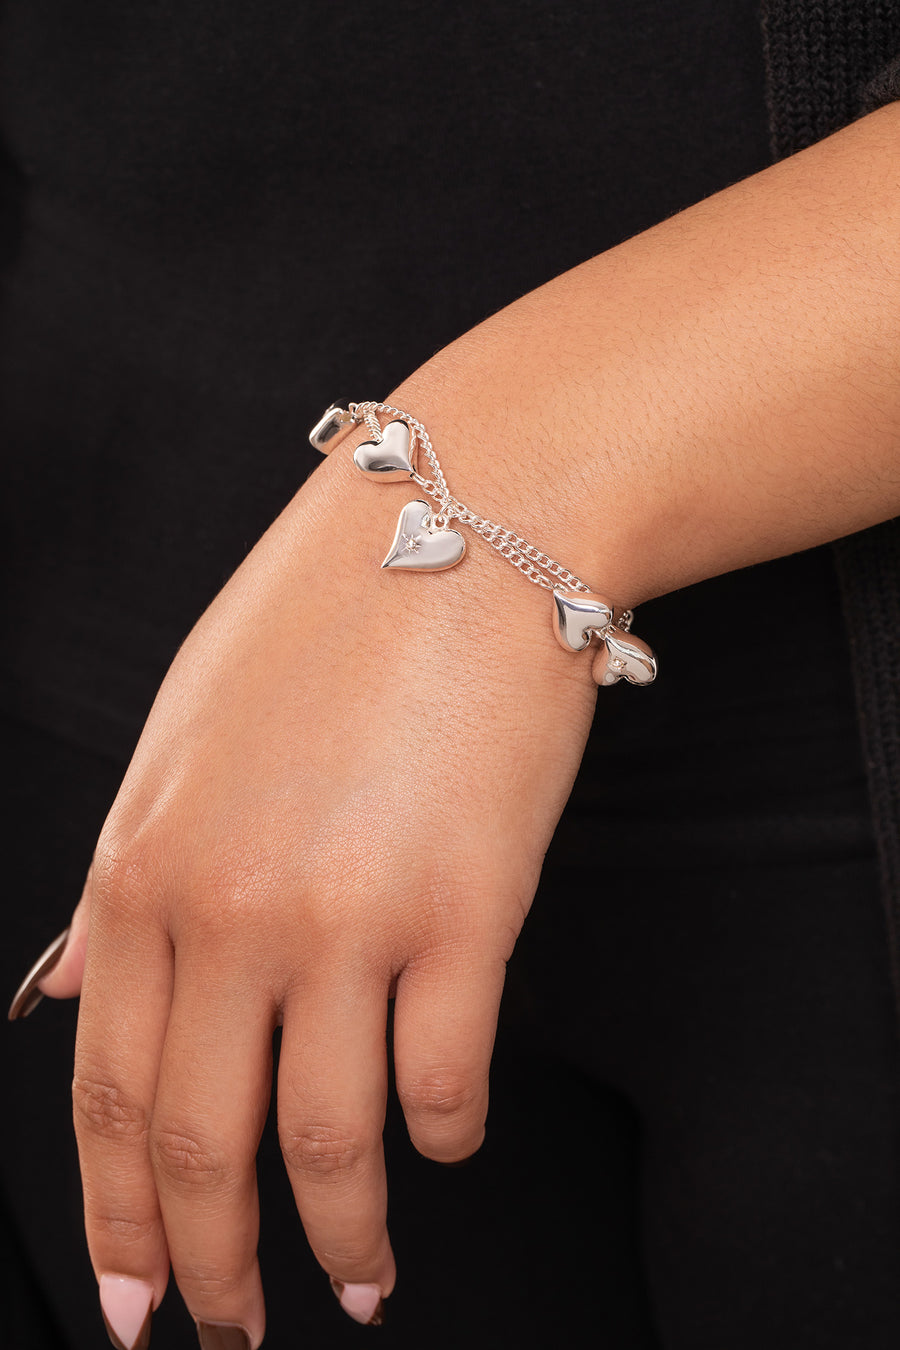 Silver heart sparkle bracelet layered gift